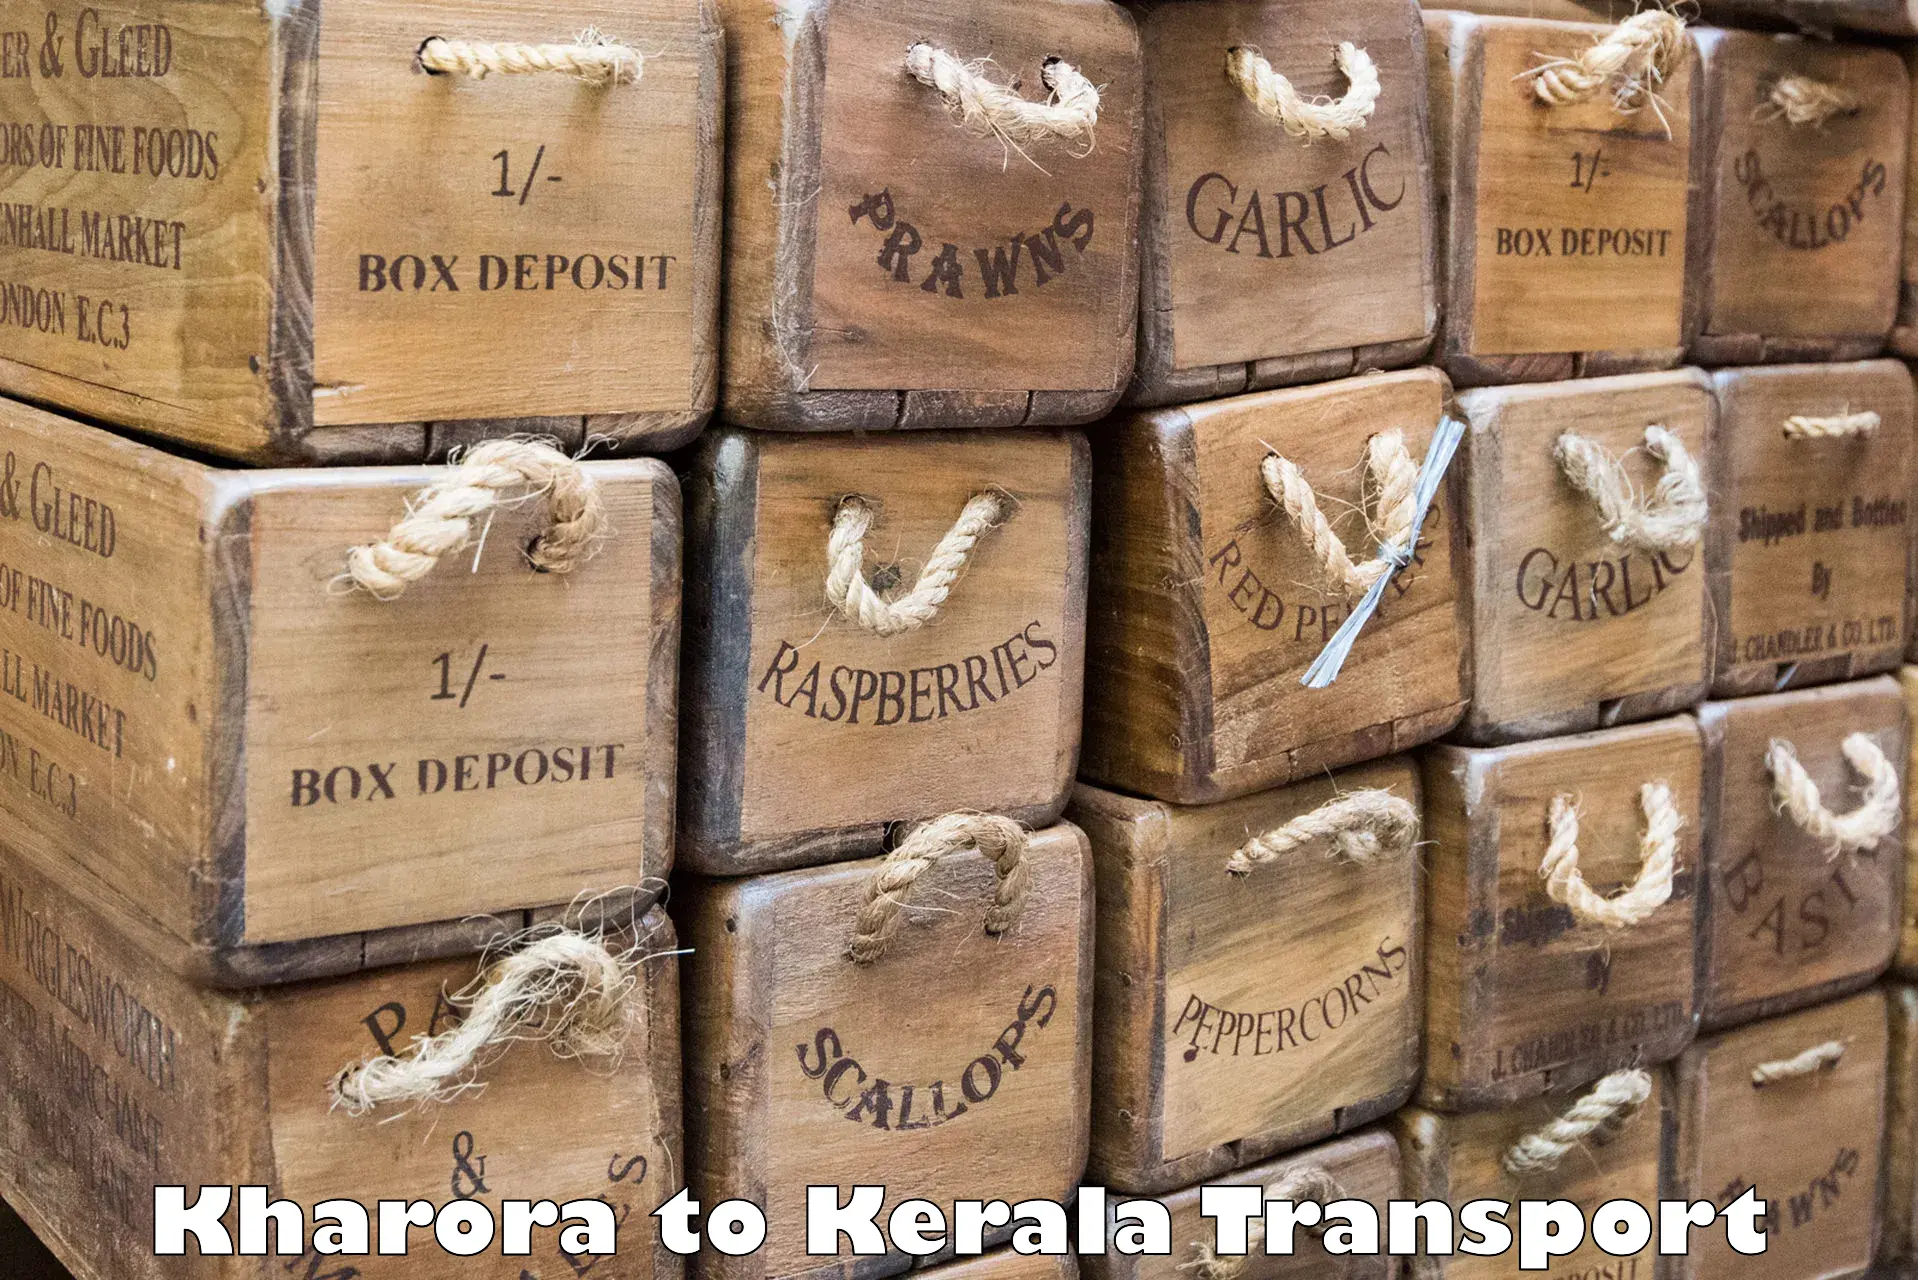 Air freight transport services Kharora to Kattappana